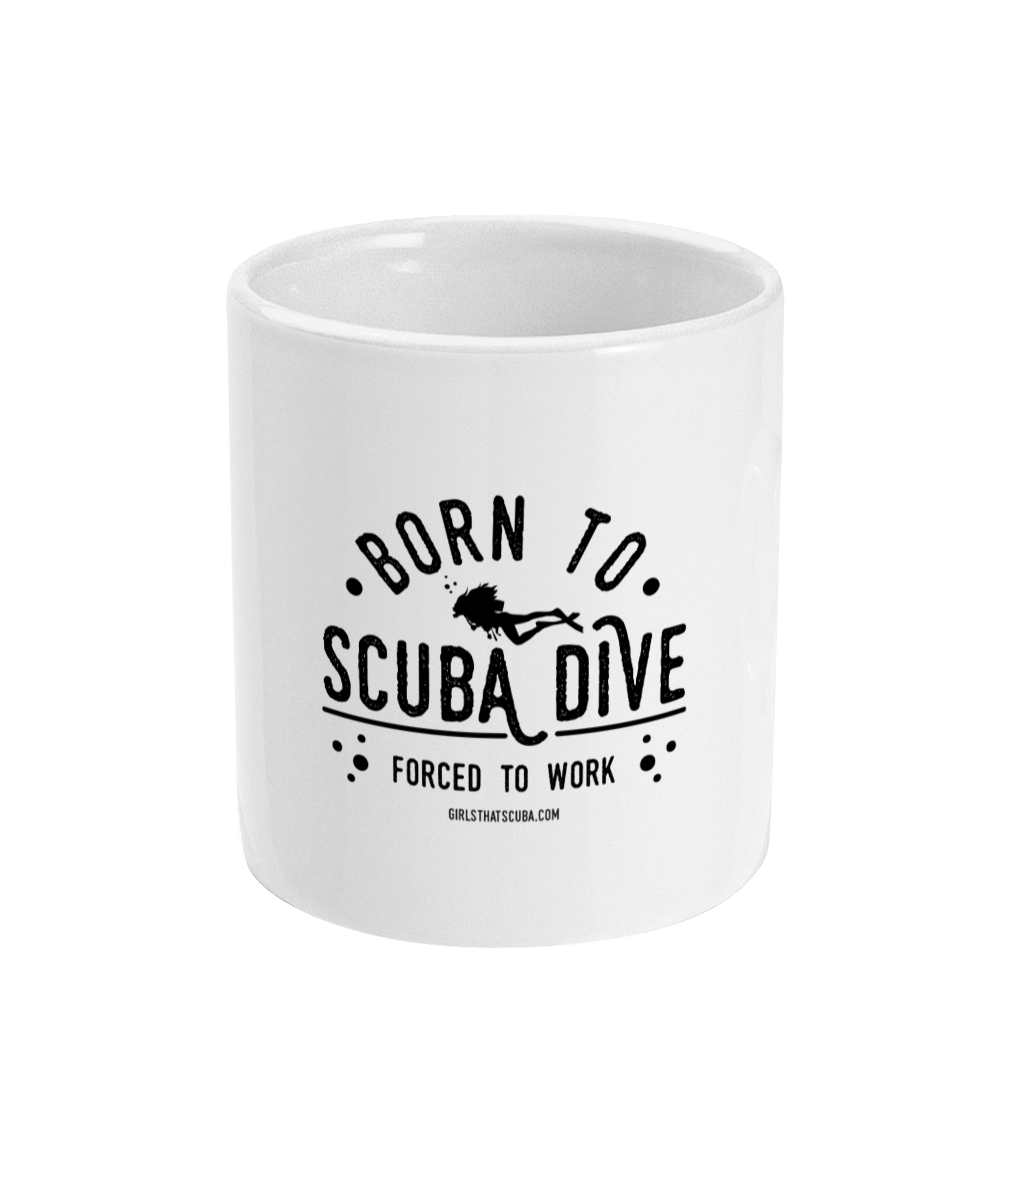 Born to scuba forced to work mug